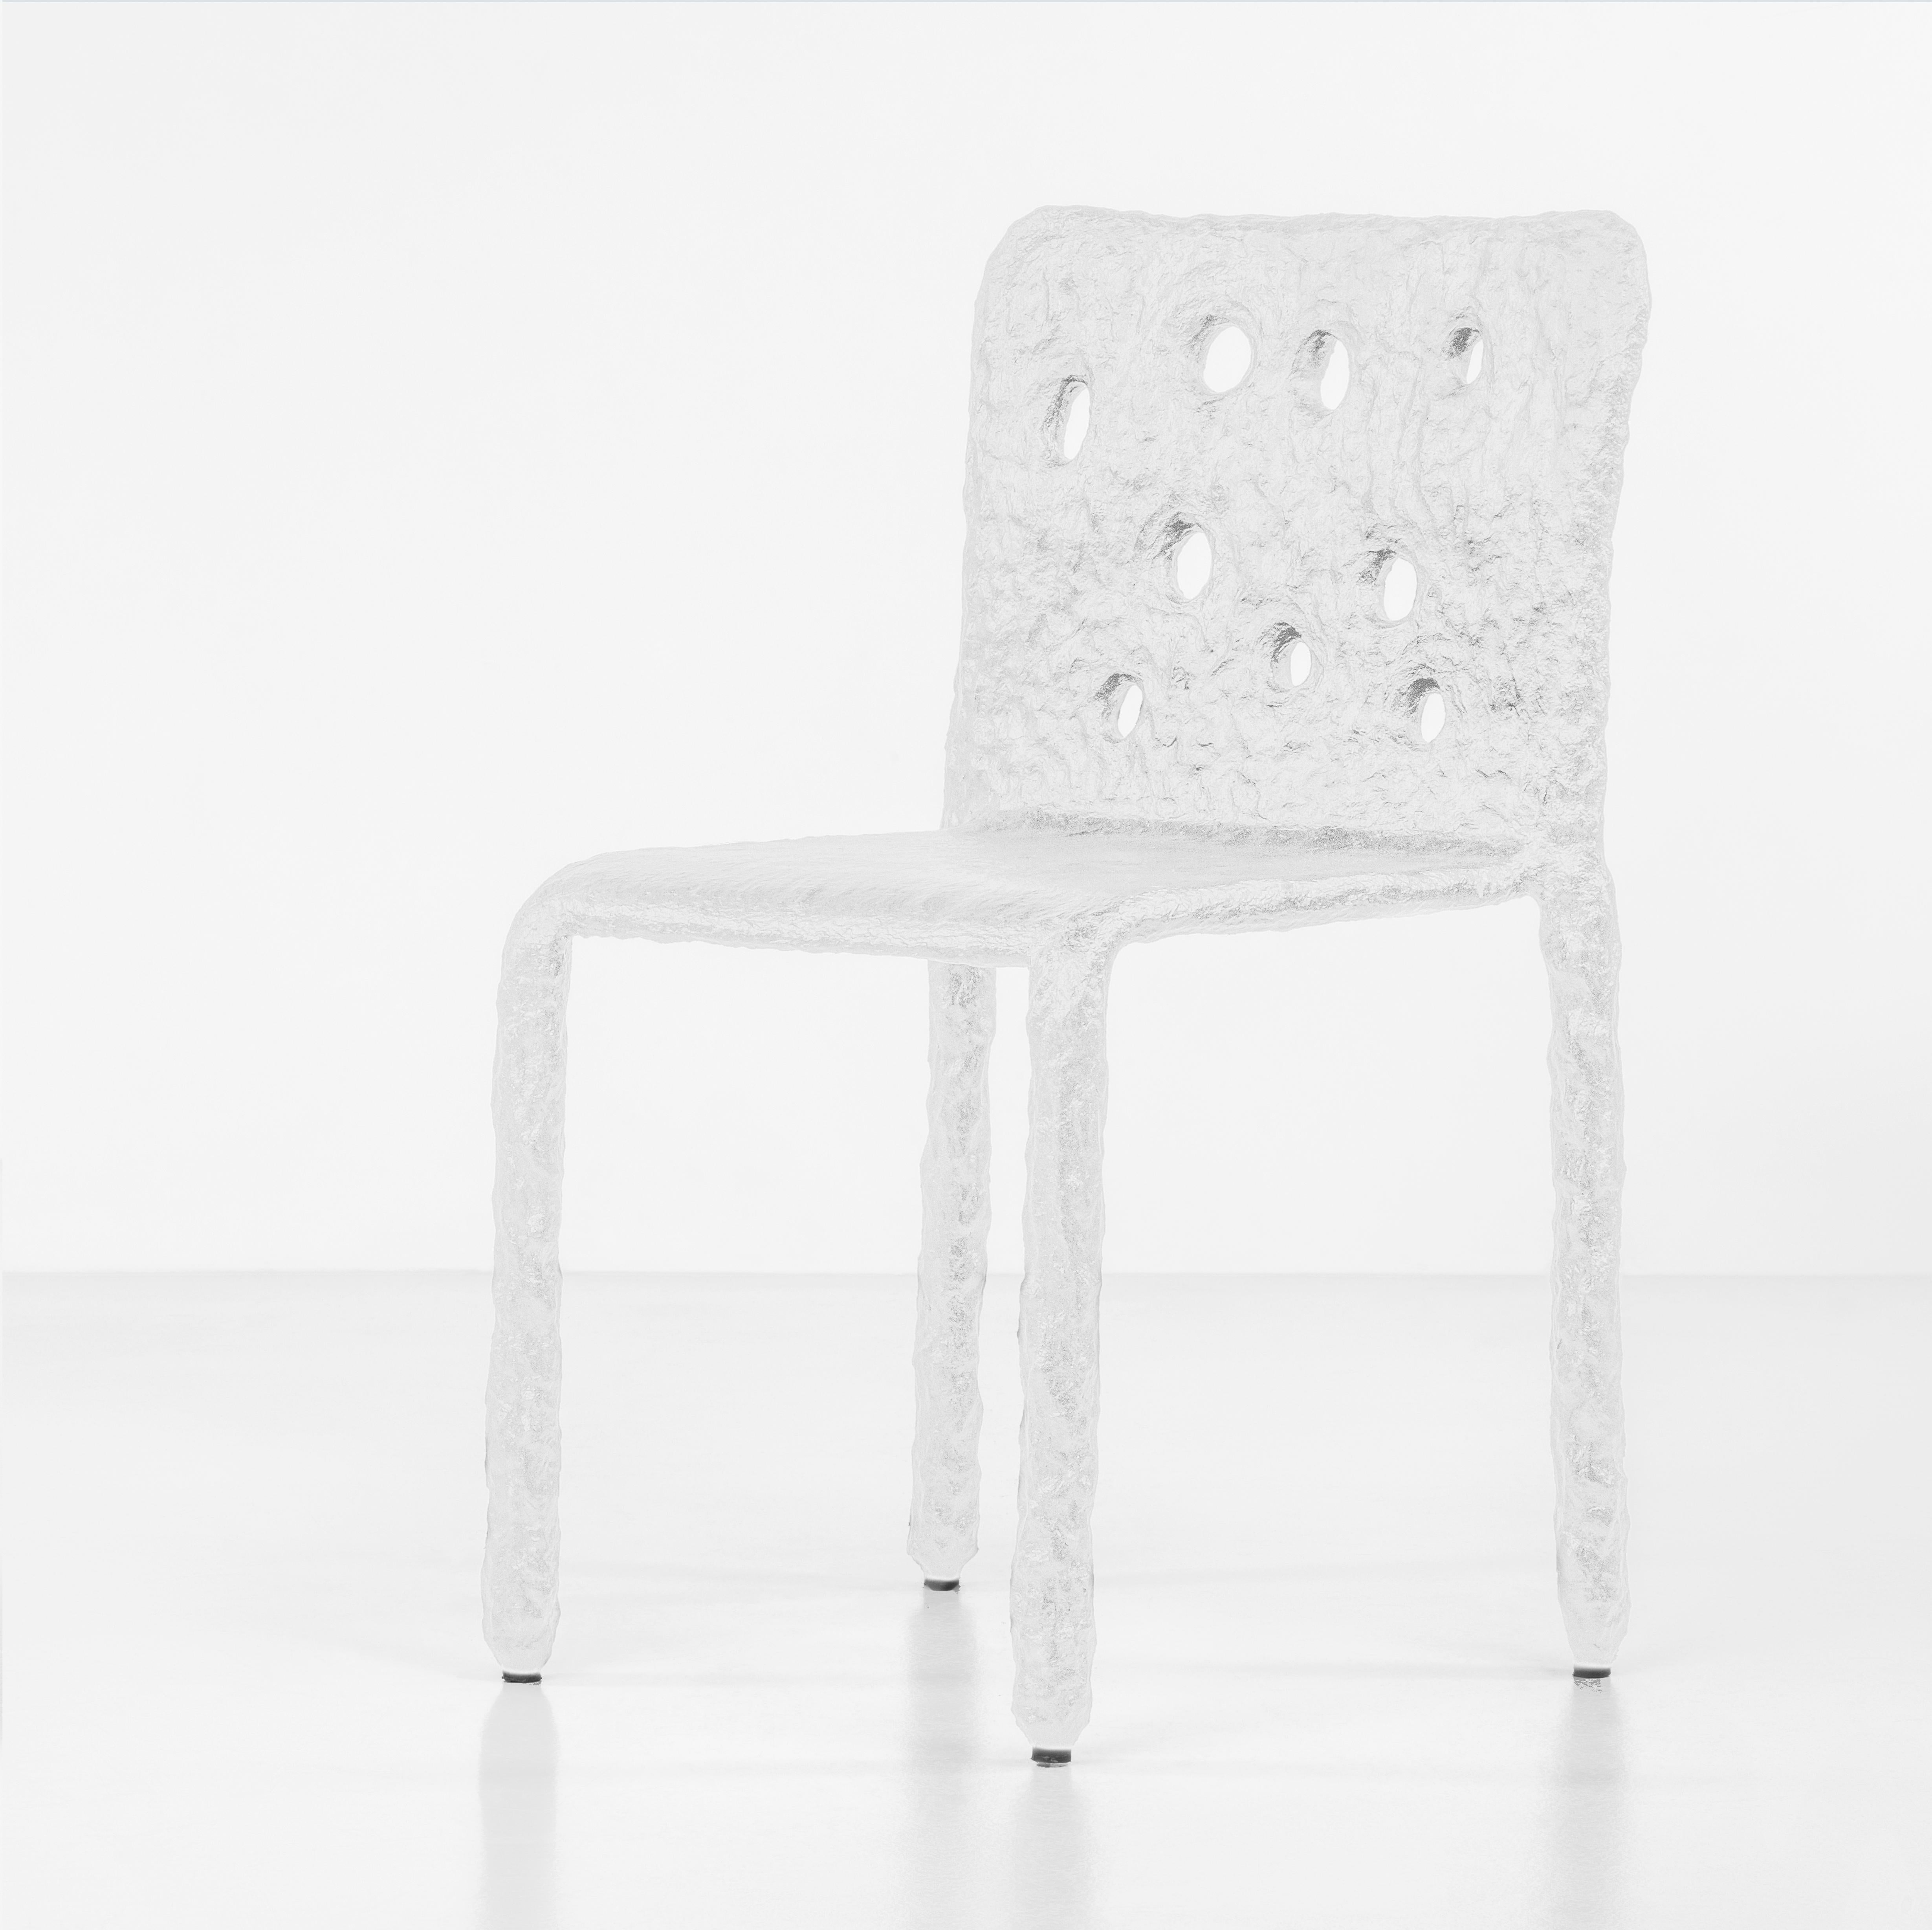 Orange Sculpted Contemporary Chair by FAINA 4